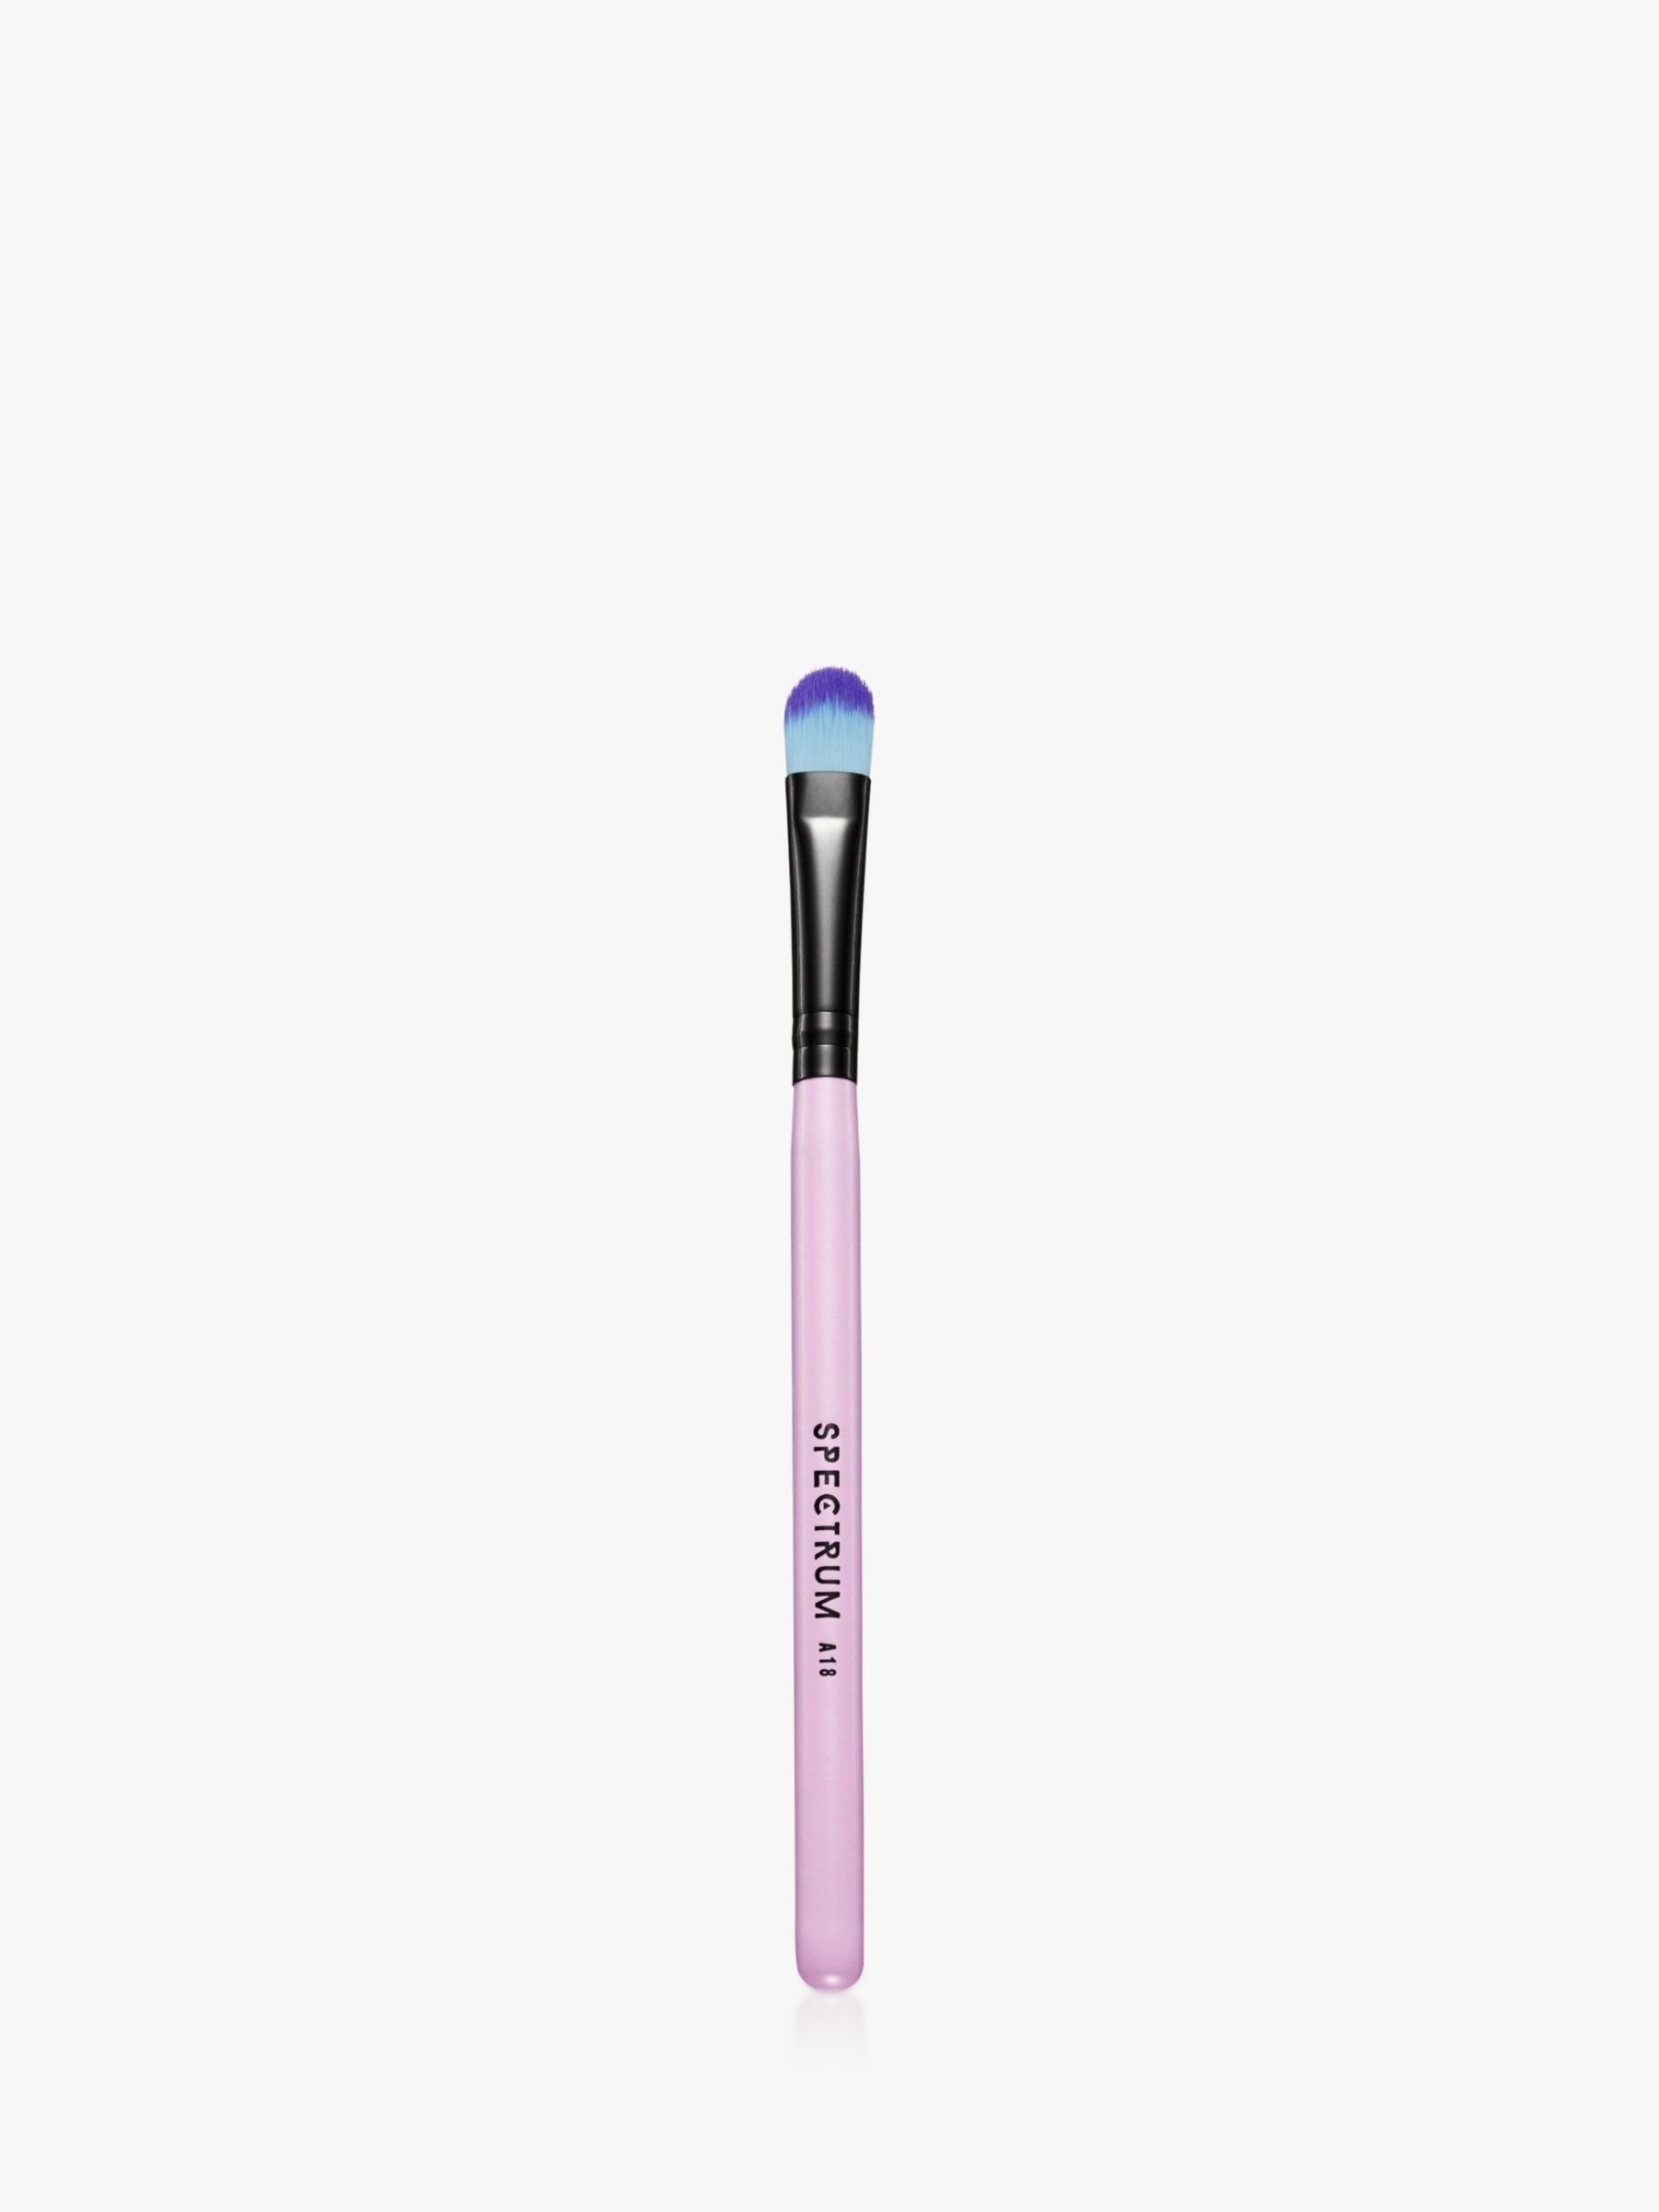 Spectrum Oval Concealer Makeup Brush